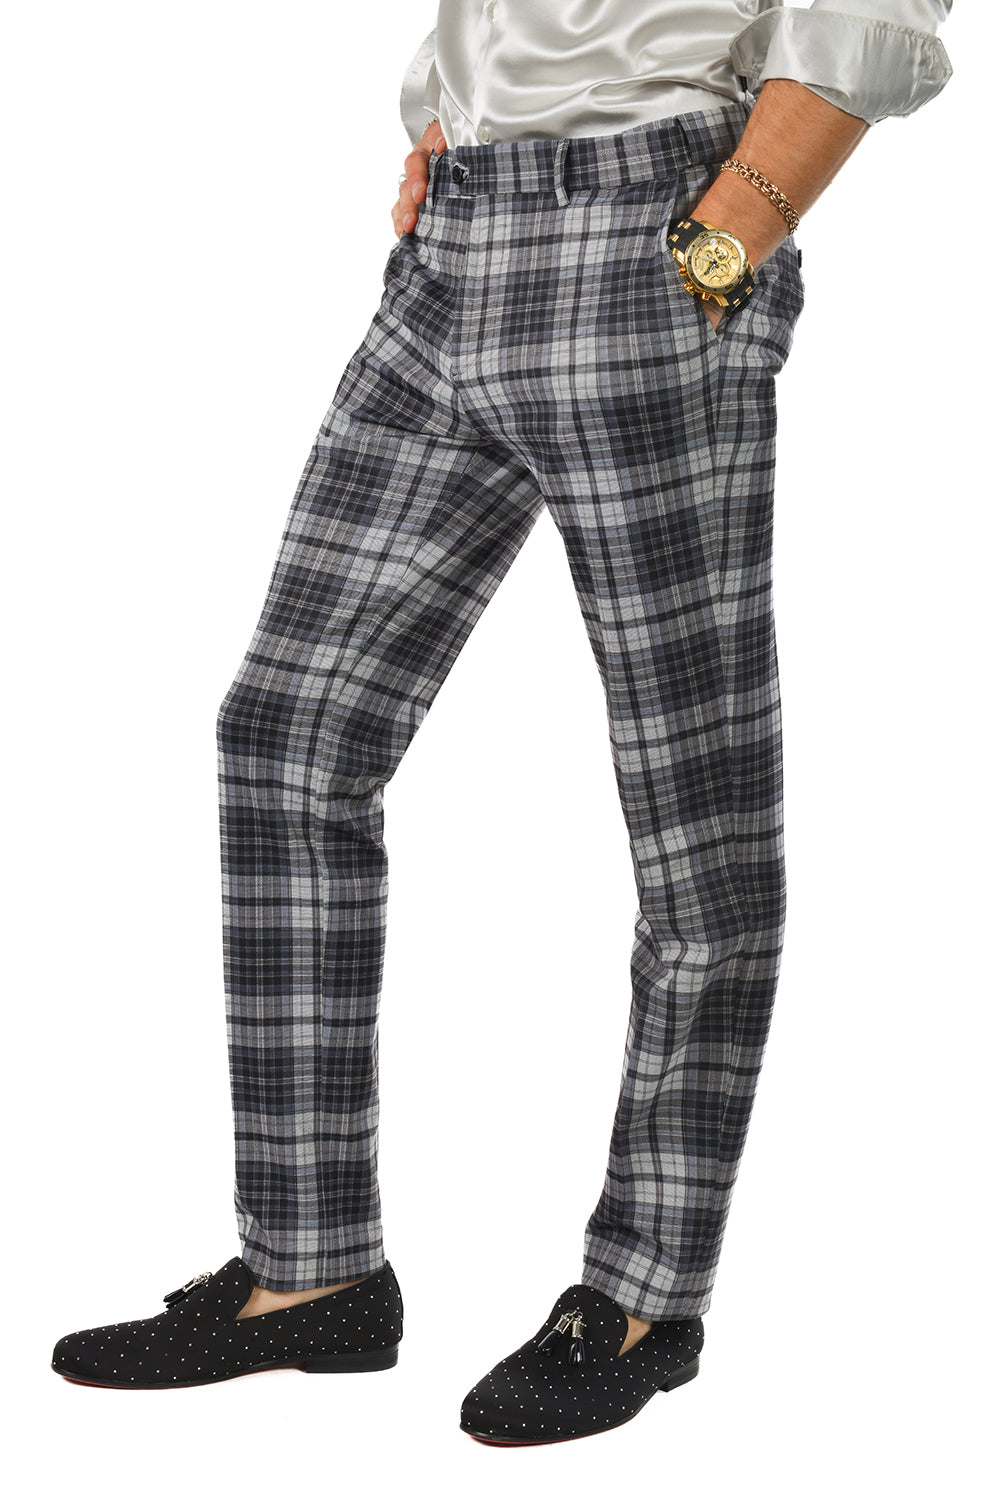 Barabas Men's Checkered Plaid Basic Chino Dress Pants 2CP191 Grey Black